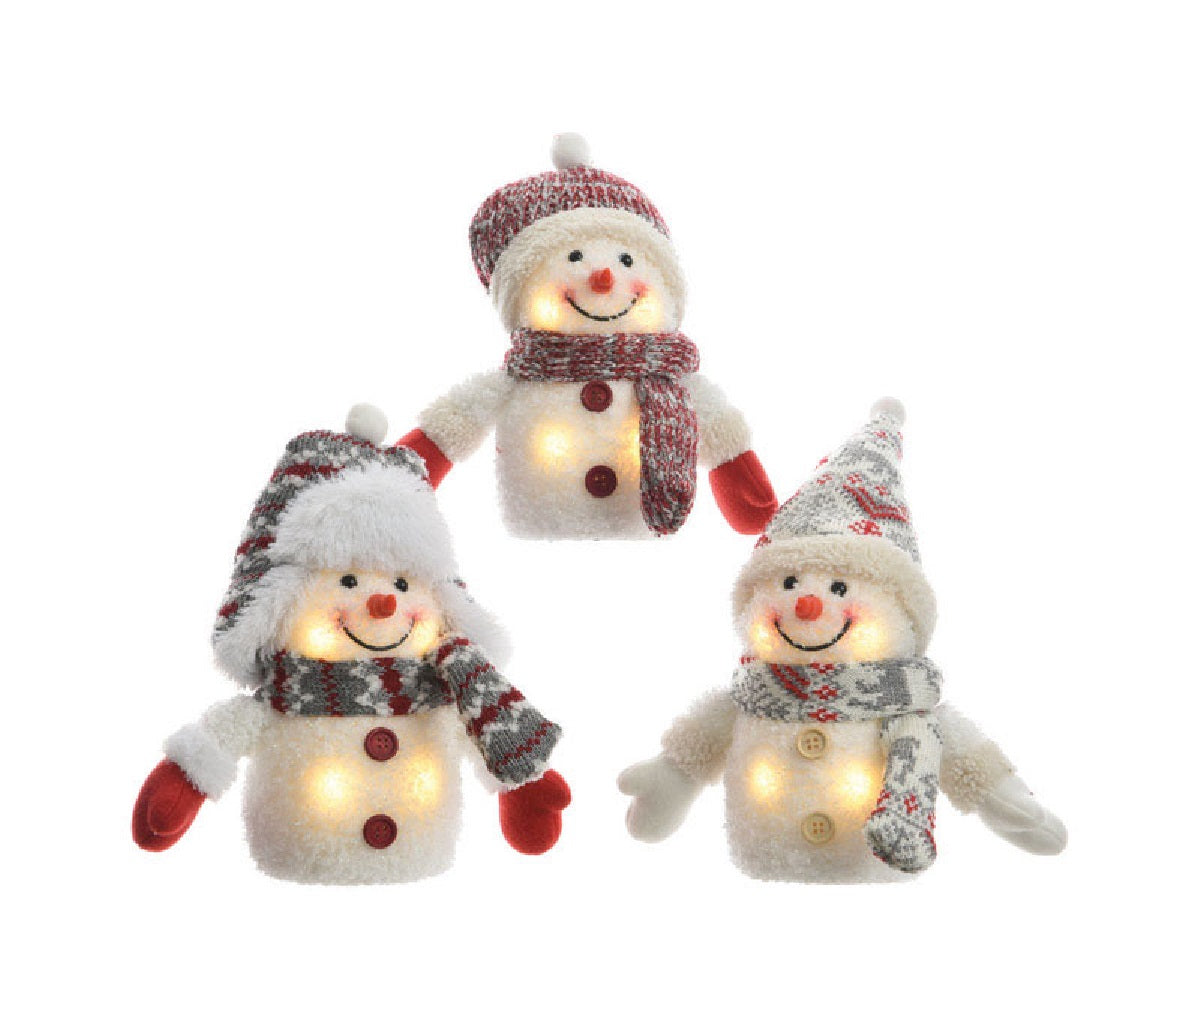 Decoris 481957 LED Plush Snowman Christmas Decoration, Red/White